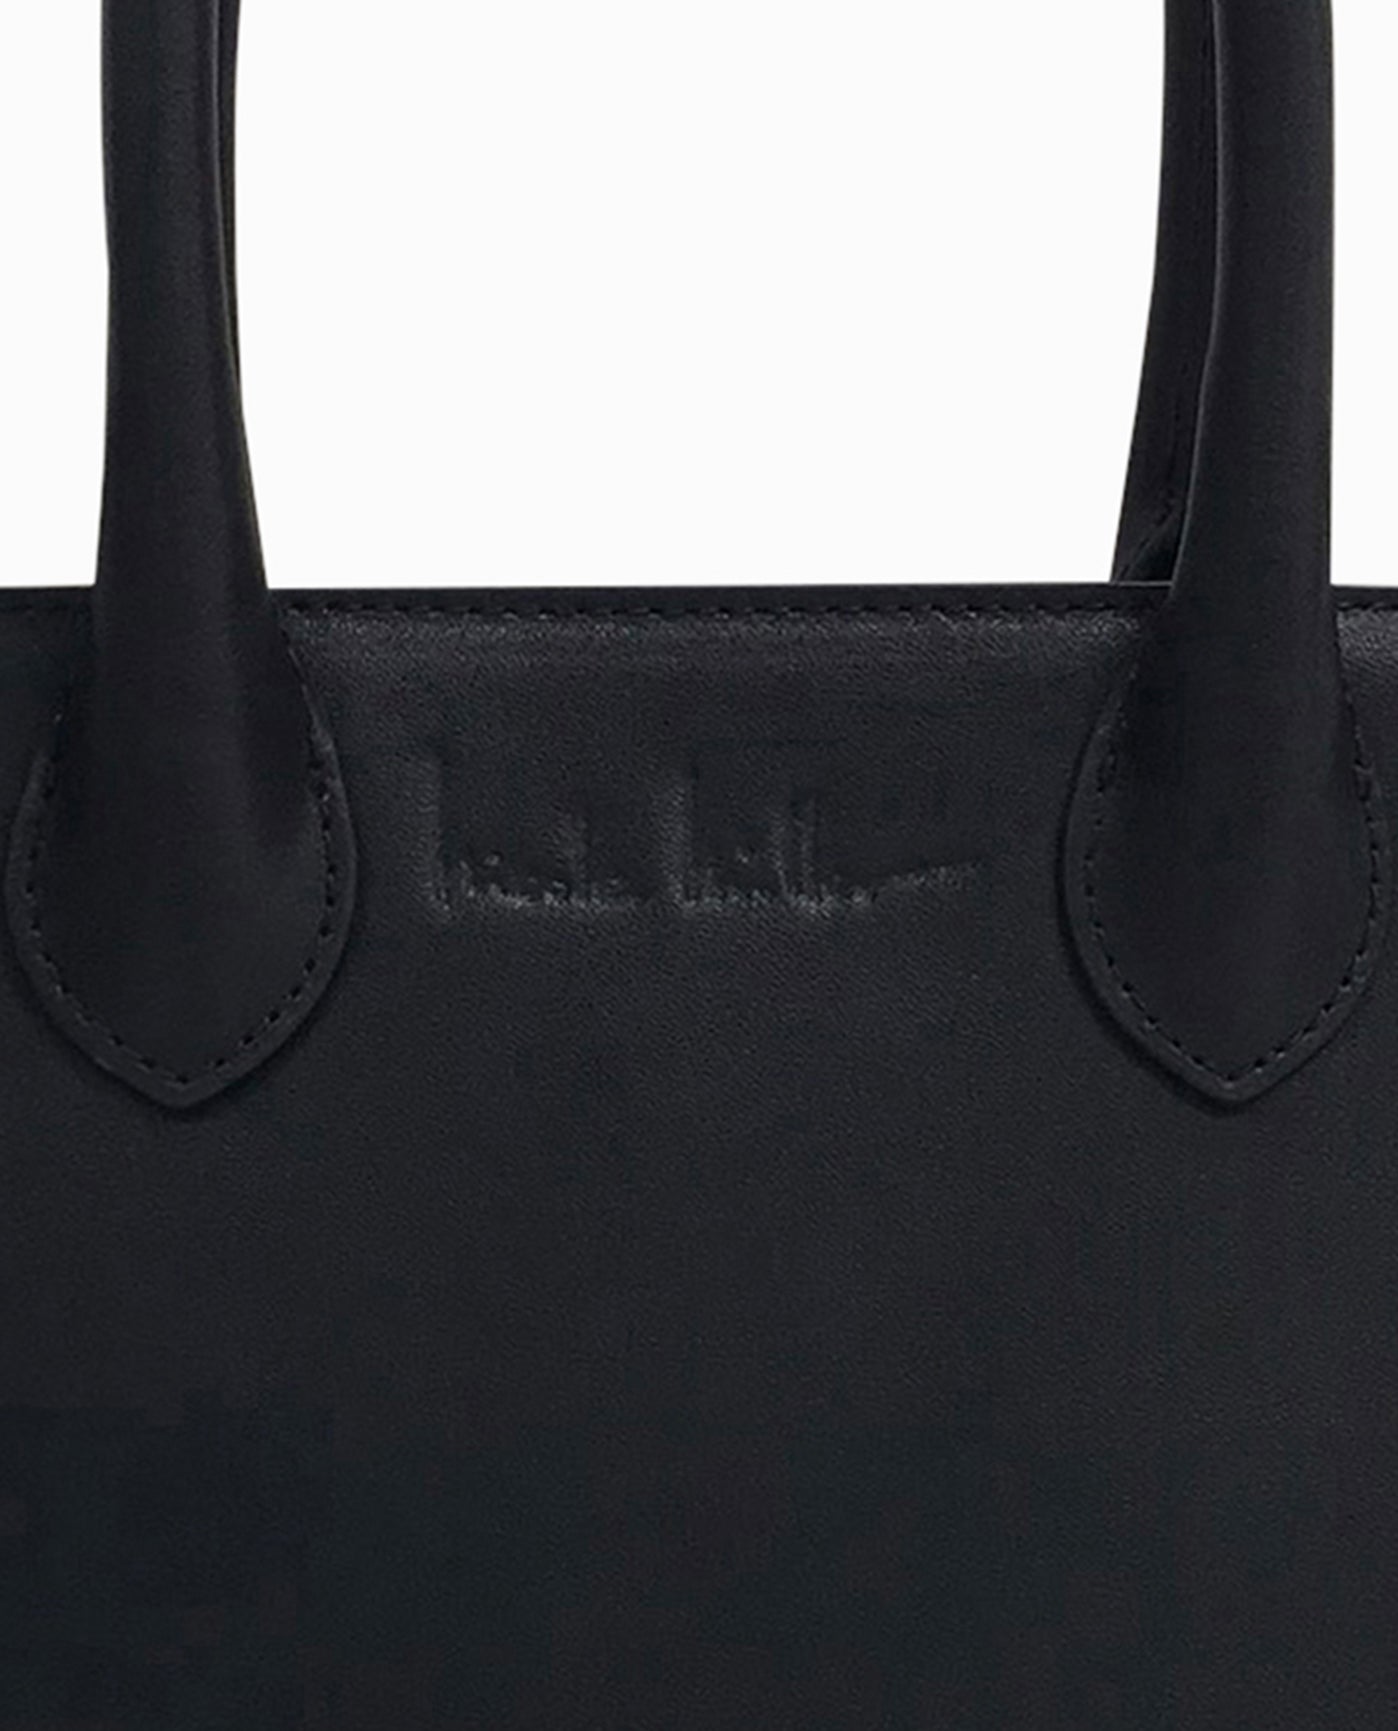 Nicole Miller | Bags | Nicole Miller New York Black Leather Designer Bag |  Poshmark